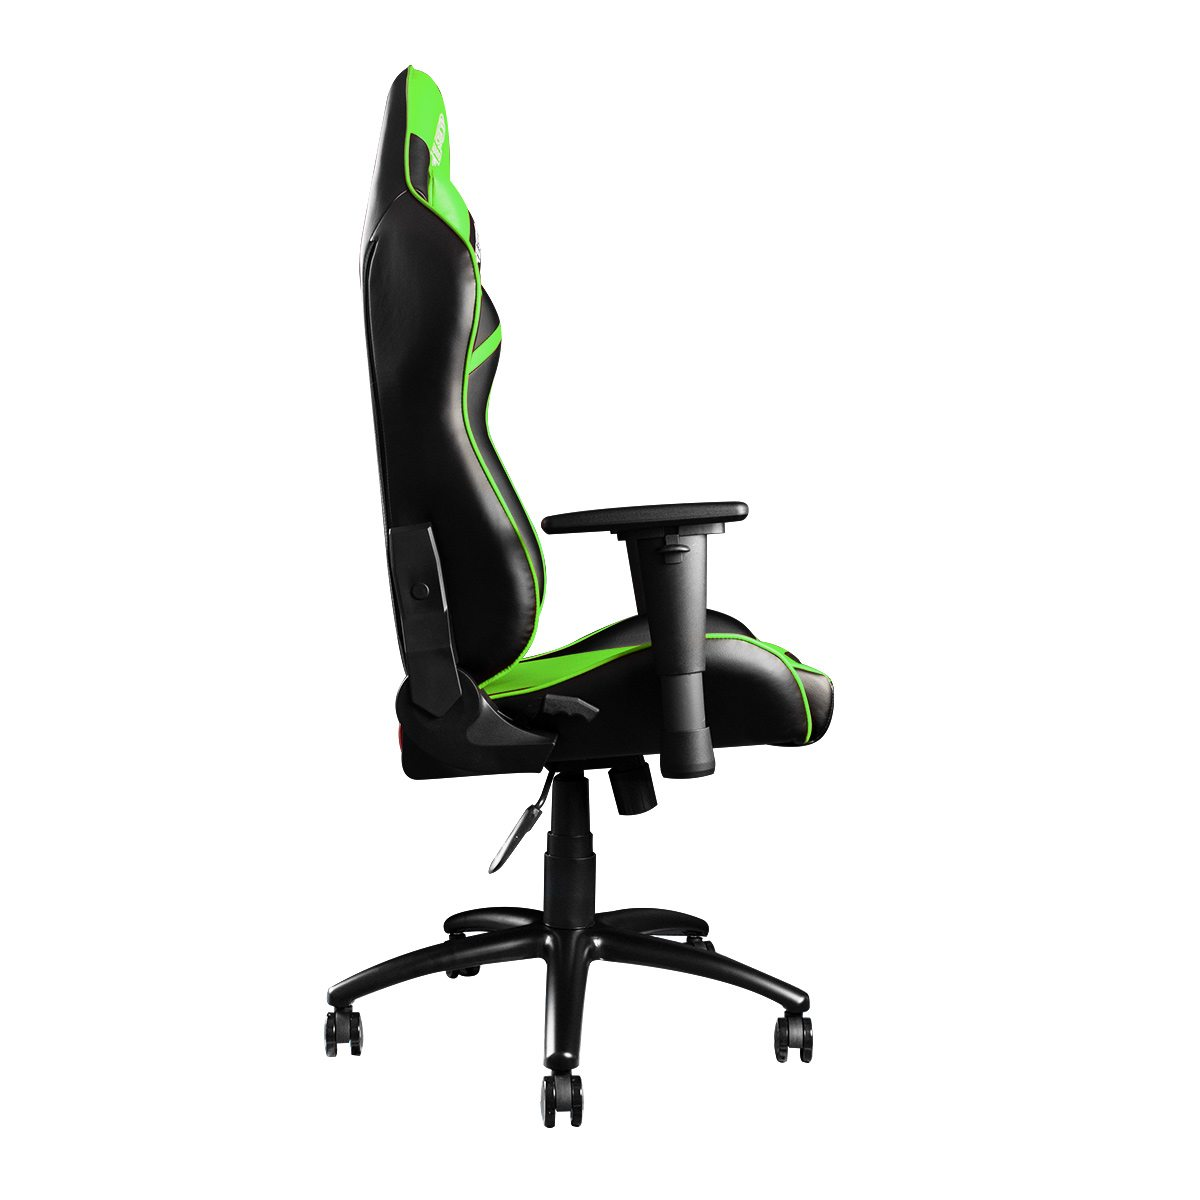 ONE GAMING Chair grün - Stuhl, Gaming Green schwarz Pro